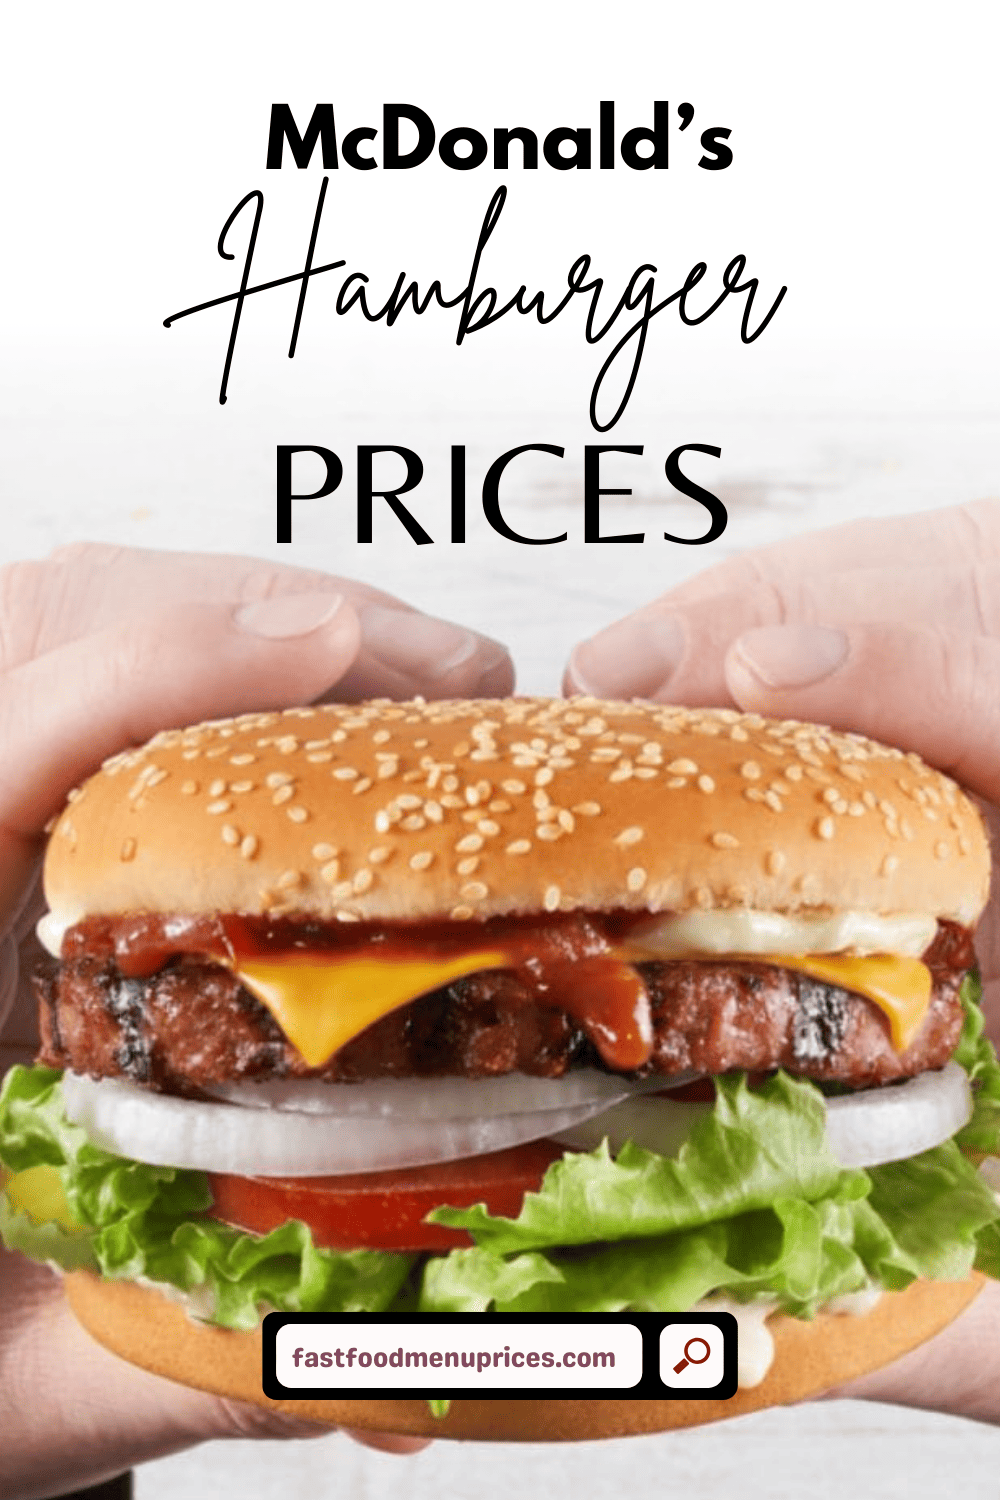 Mcdonald's hamburger prices and raising cane's secret menu.